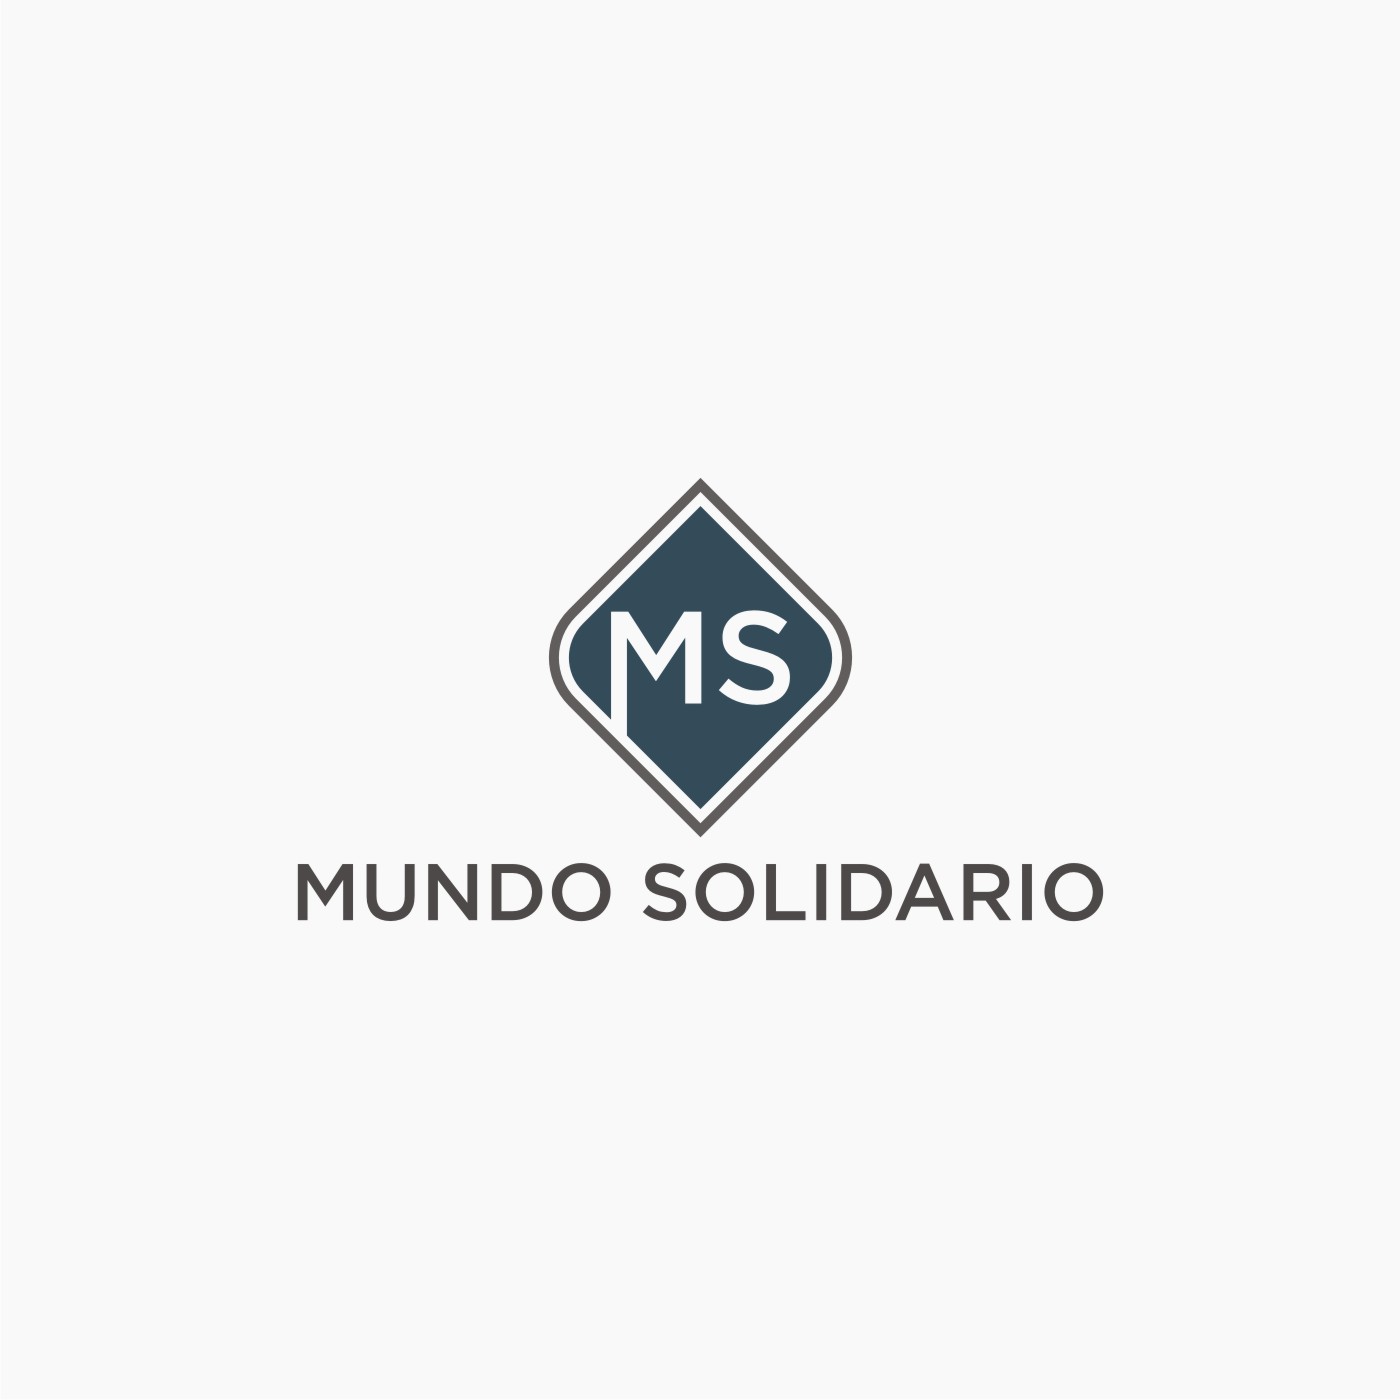 Logo Design entry 1896920 submitted by venkydarling to the Logo Design for Mundo Solidario,  run by alxmalaga